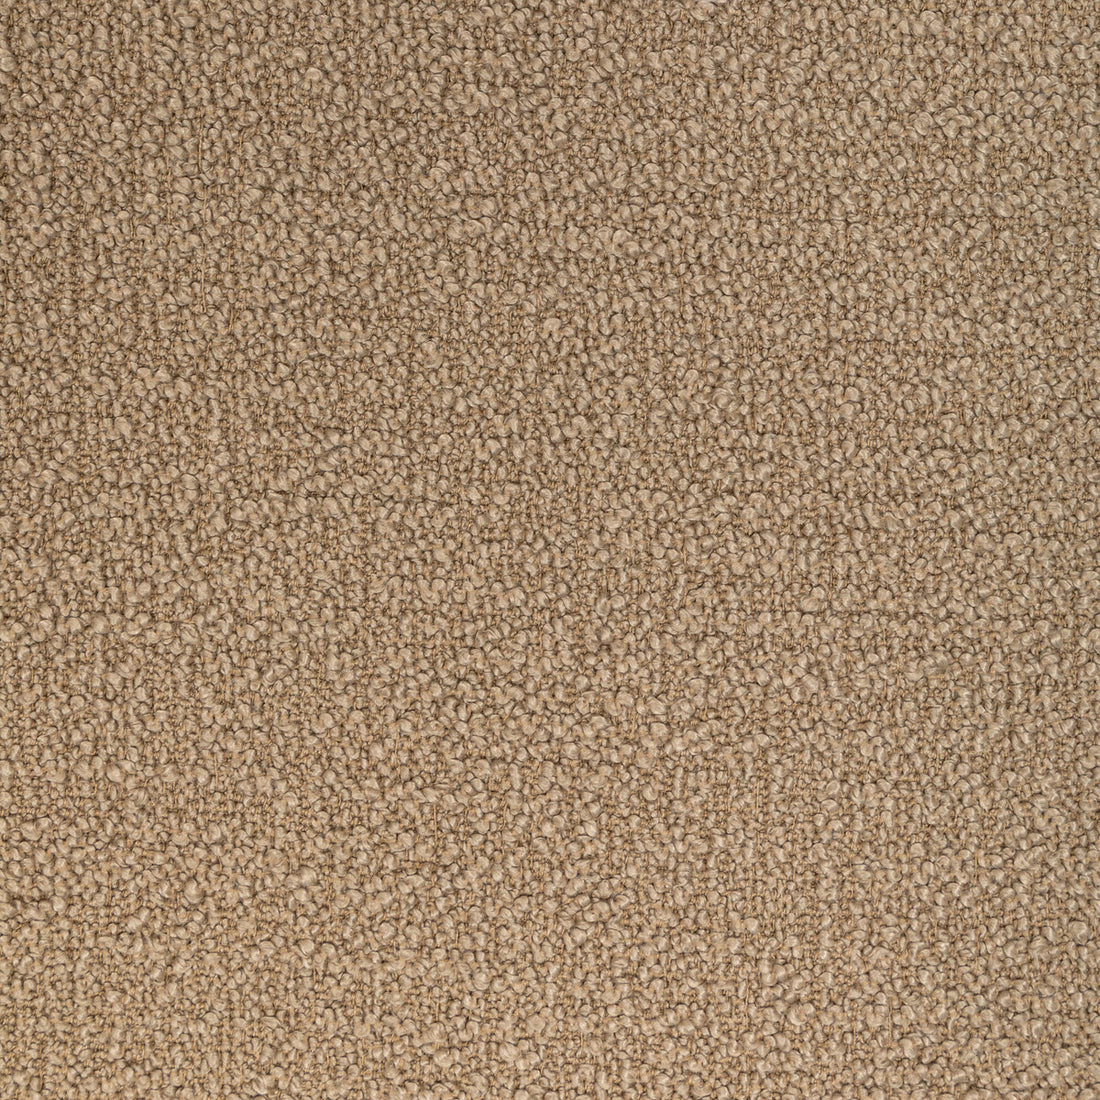 Kravet Smart fabric in 36857-1616 color - pattern 36857.1616.0 - by Kravet Smart in the Performance Kravetarmor collection